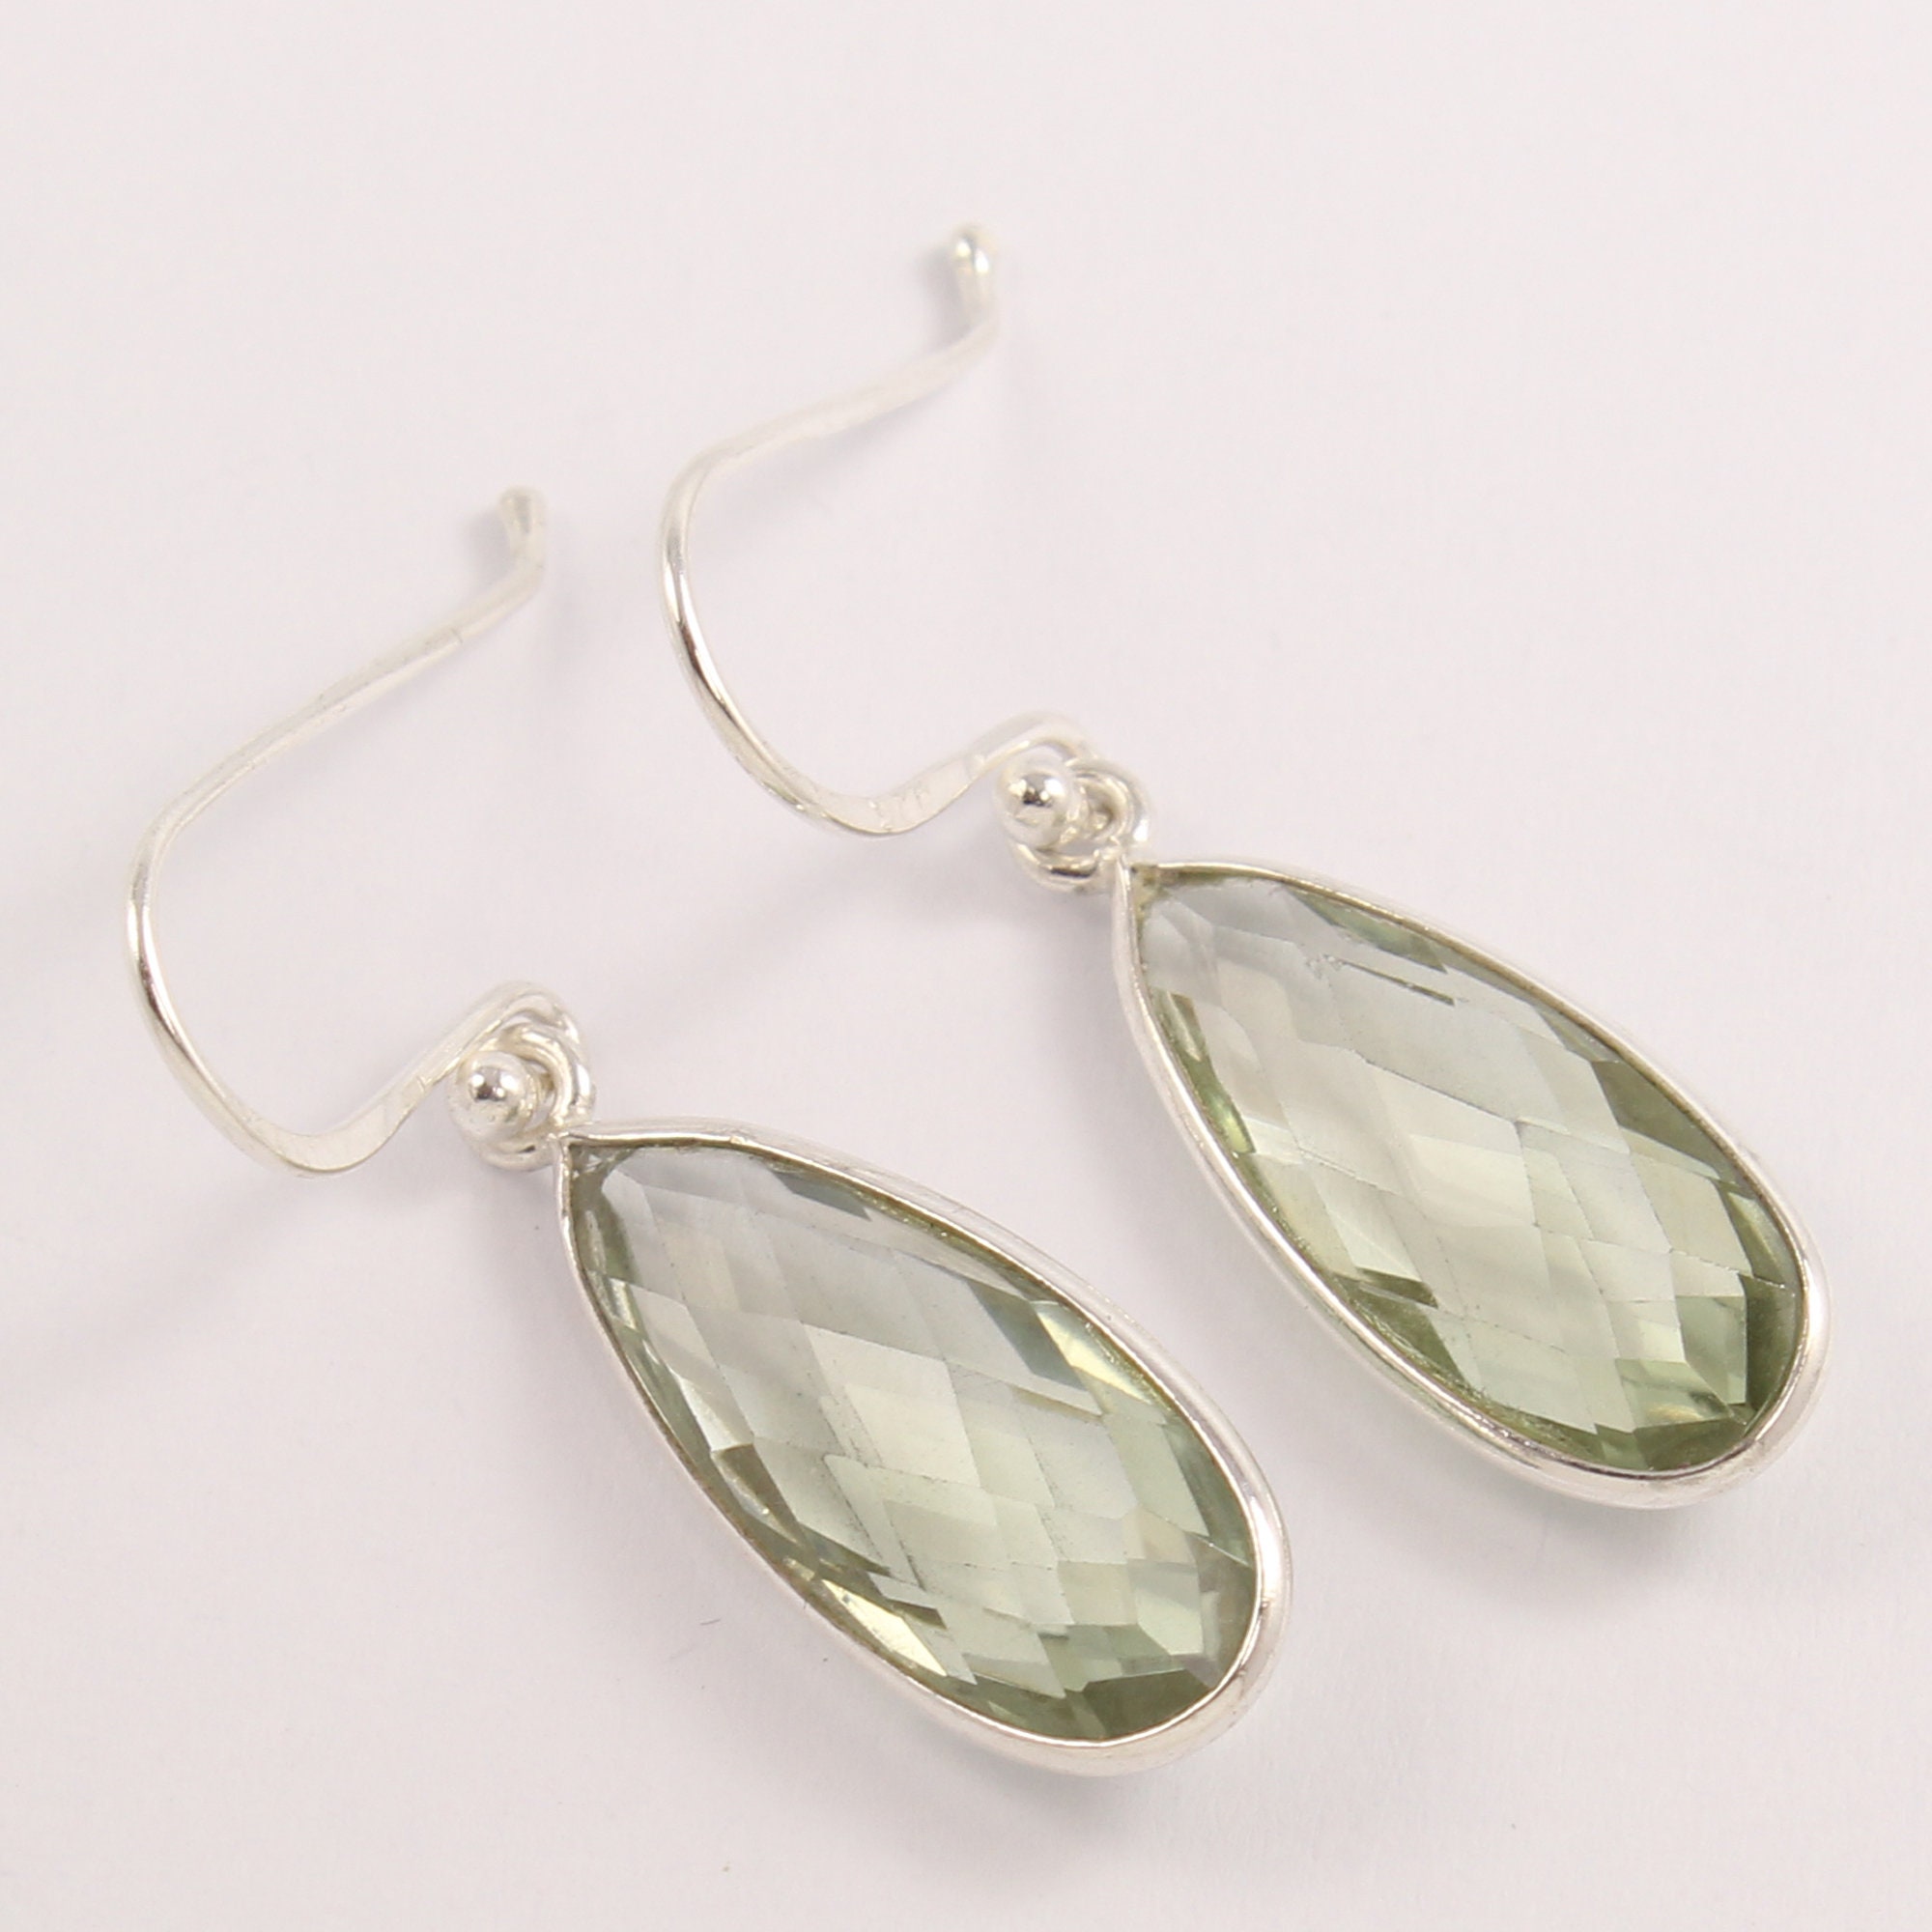 Natural Green Amethyst Earrings earrings for her 925 sterling Silver Earrings drop earrings jewellery gift for her